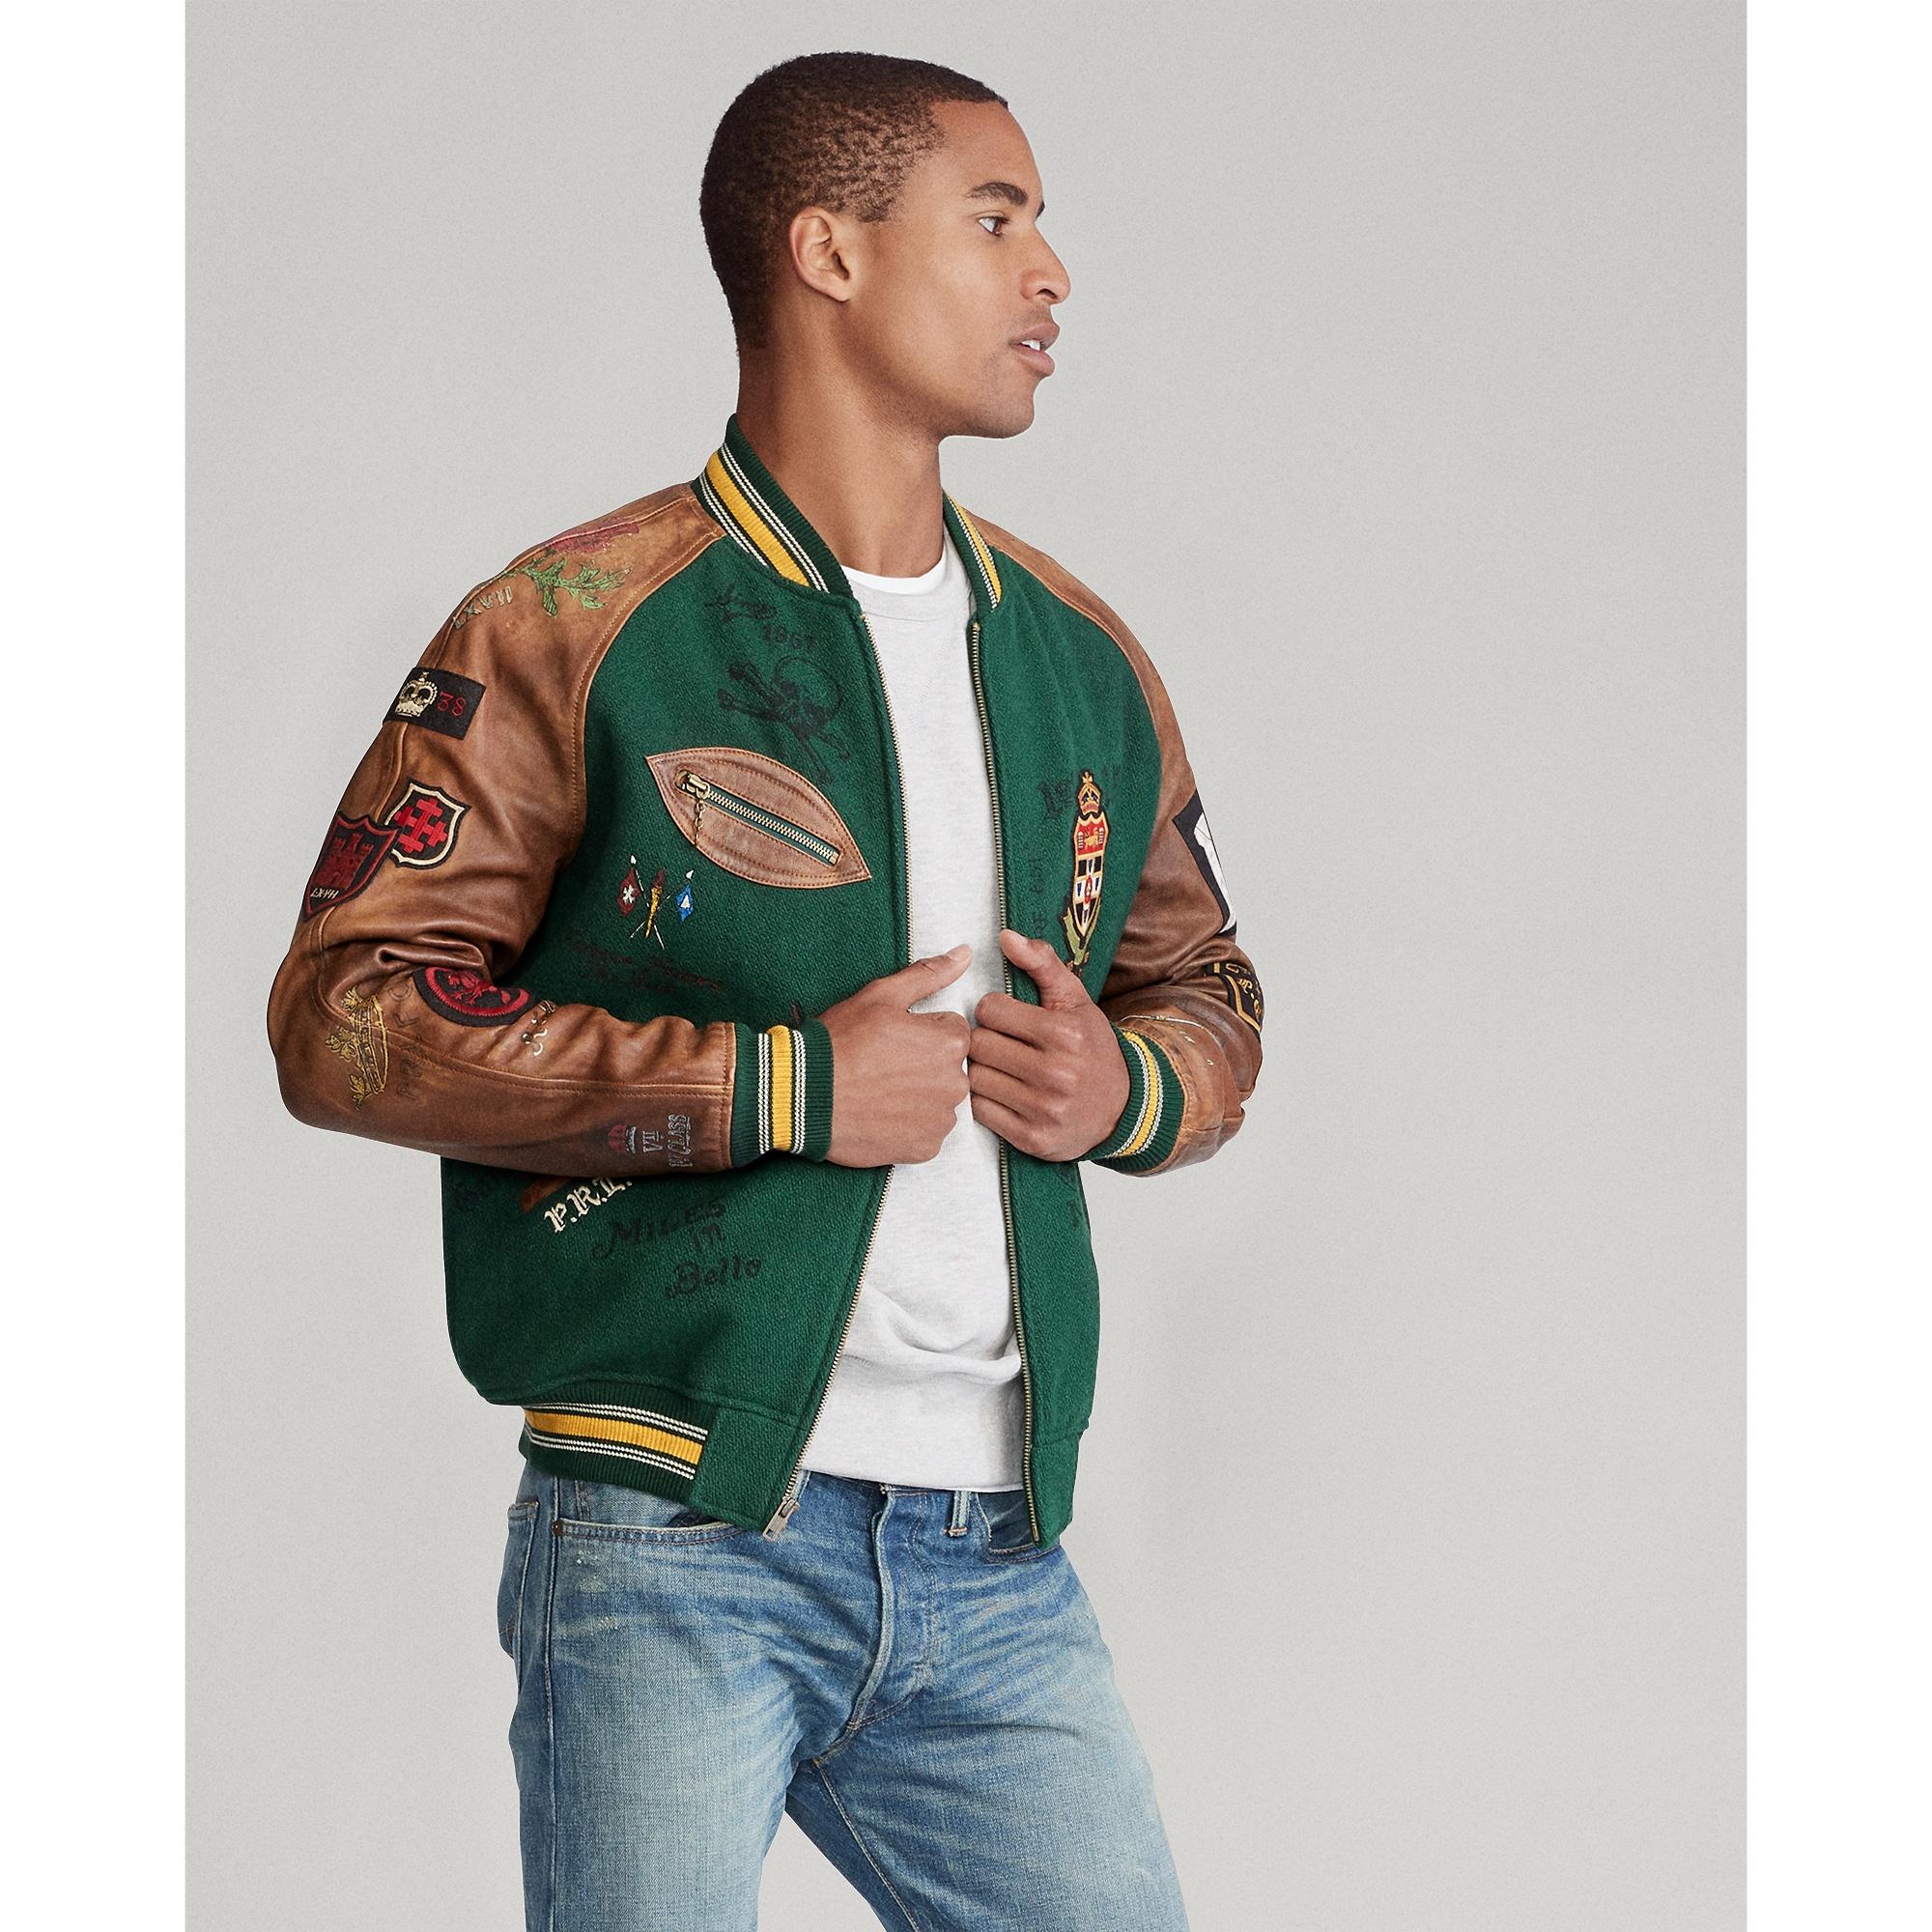 Polo Ralph Lauren Leather Varsity-inspired Jacket in Green for Men - Lyst